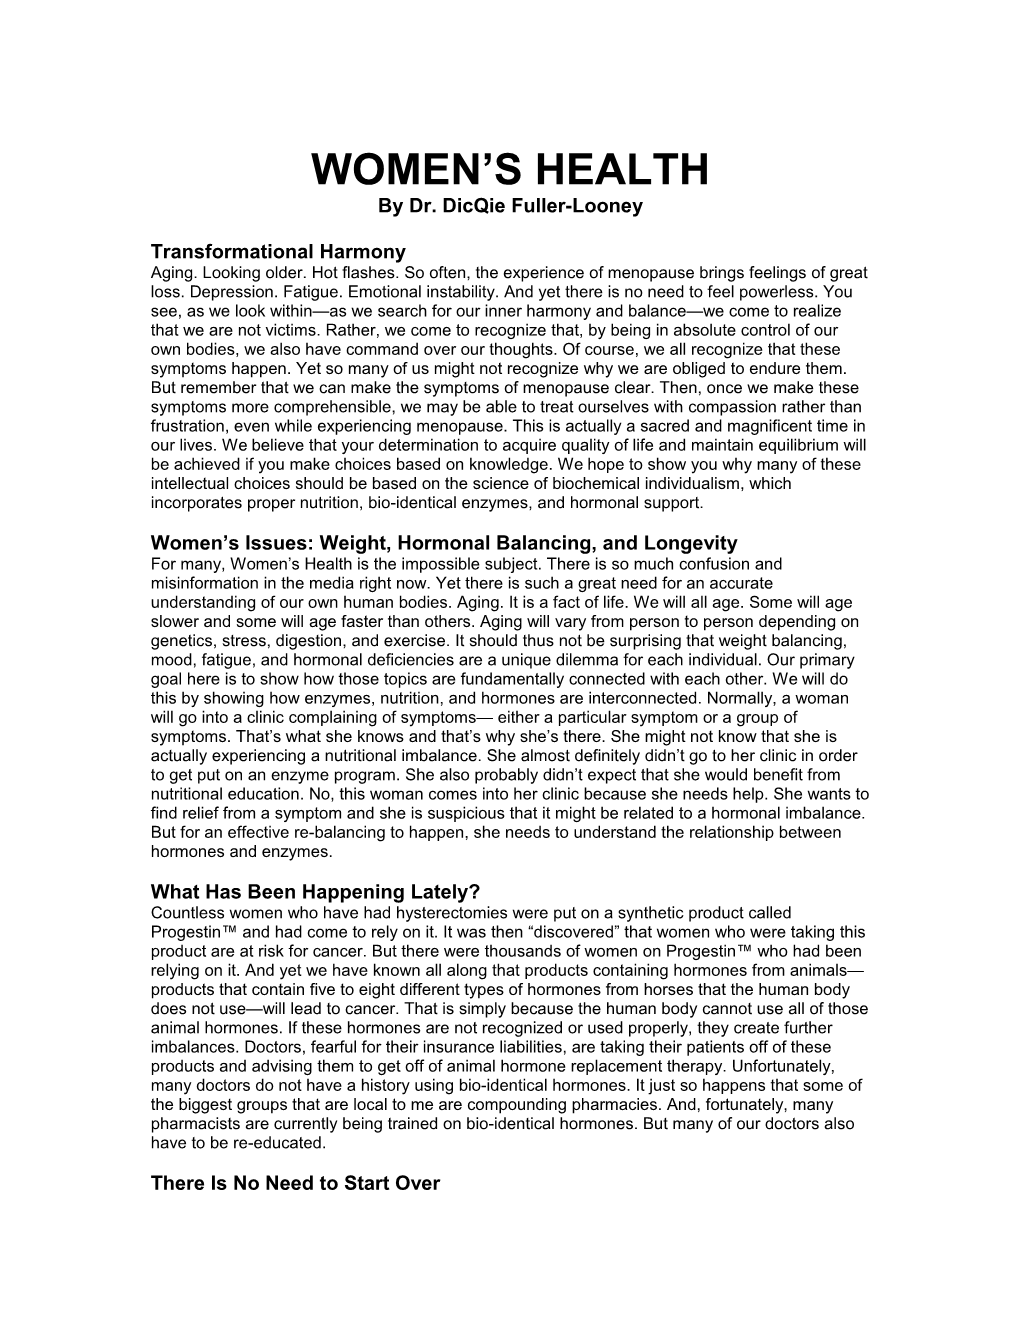 Women S Issues: Weight, Hormonal Balancing, and Longevity